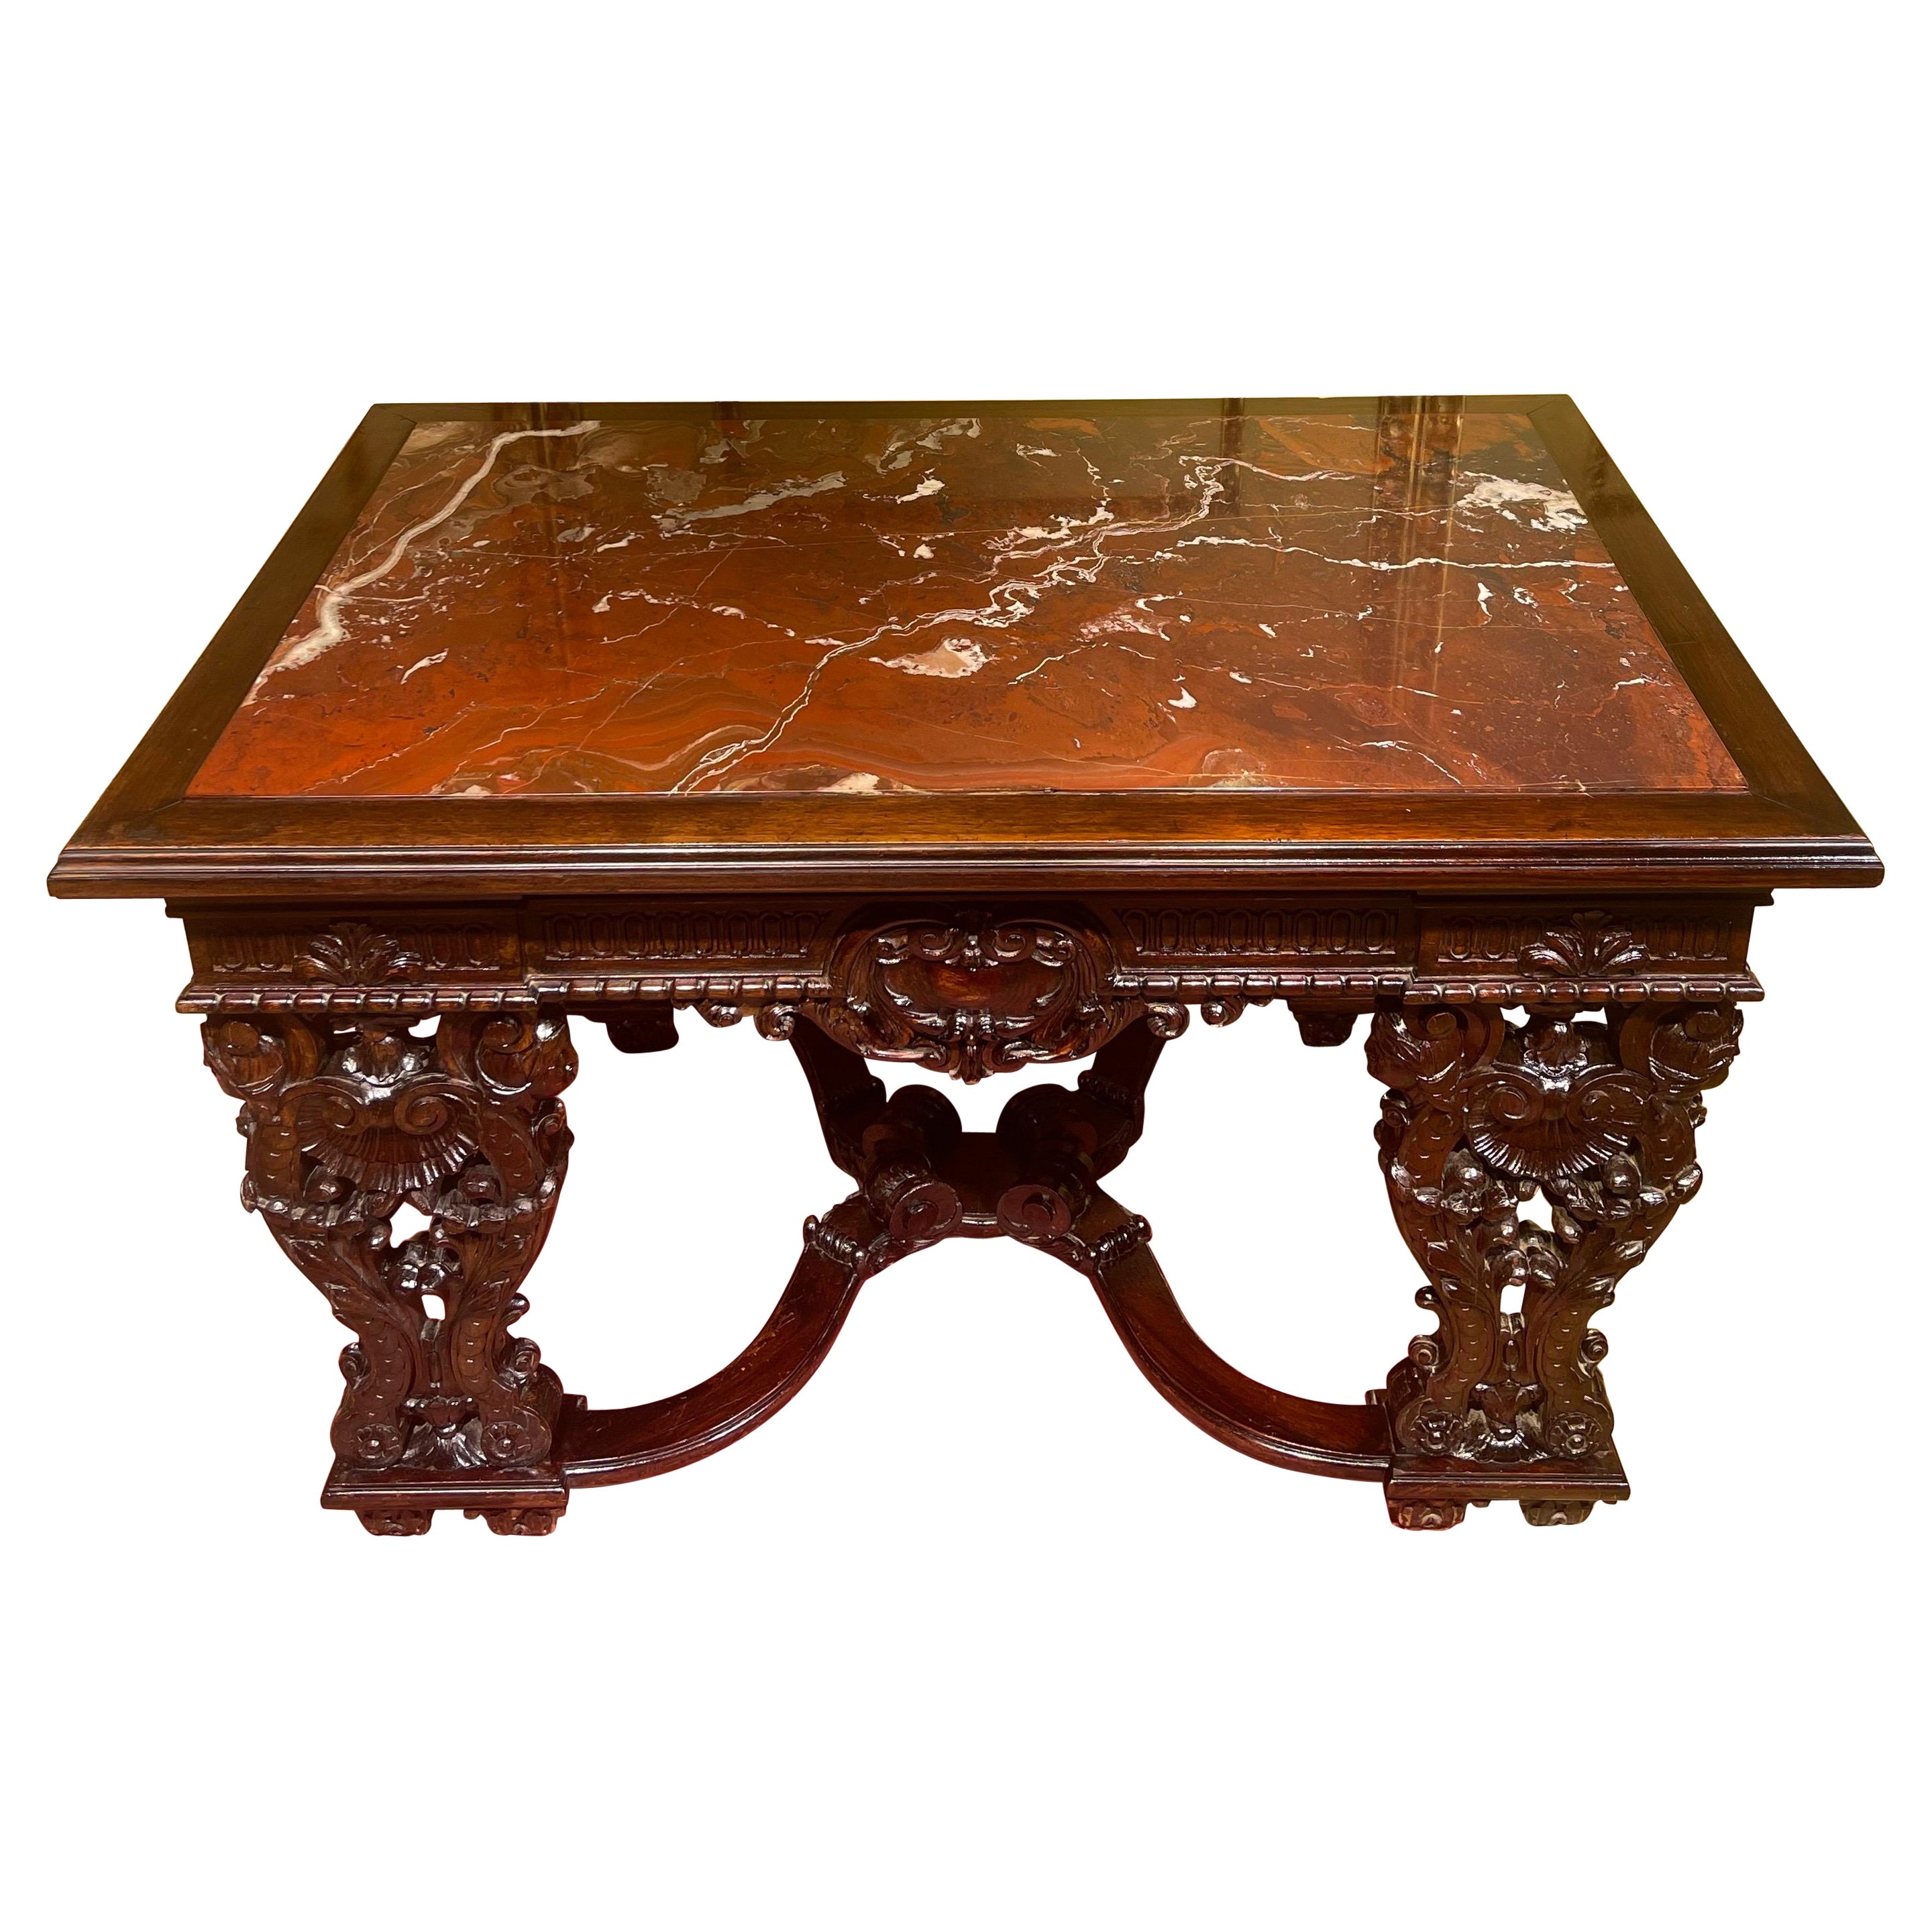 Stately Historicism Salon Table, Solid Oak, around 1880